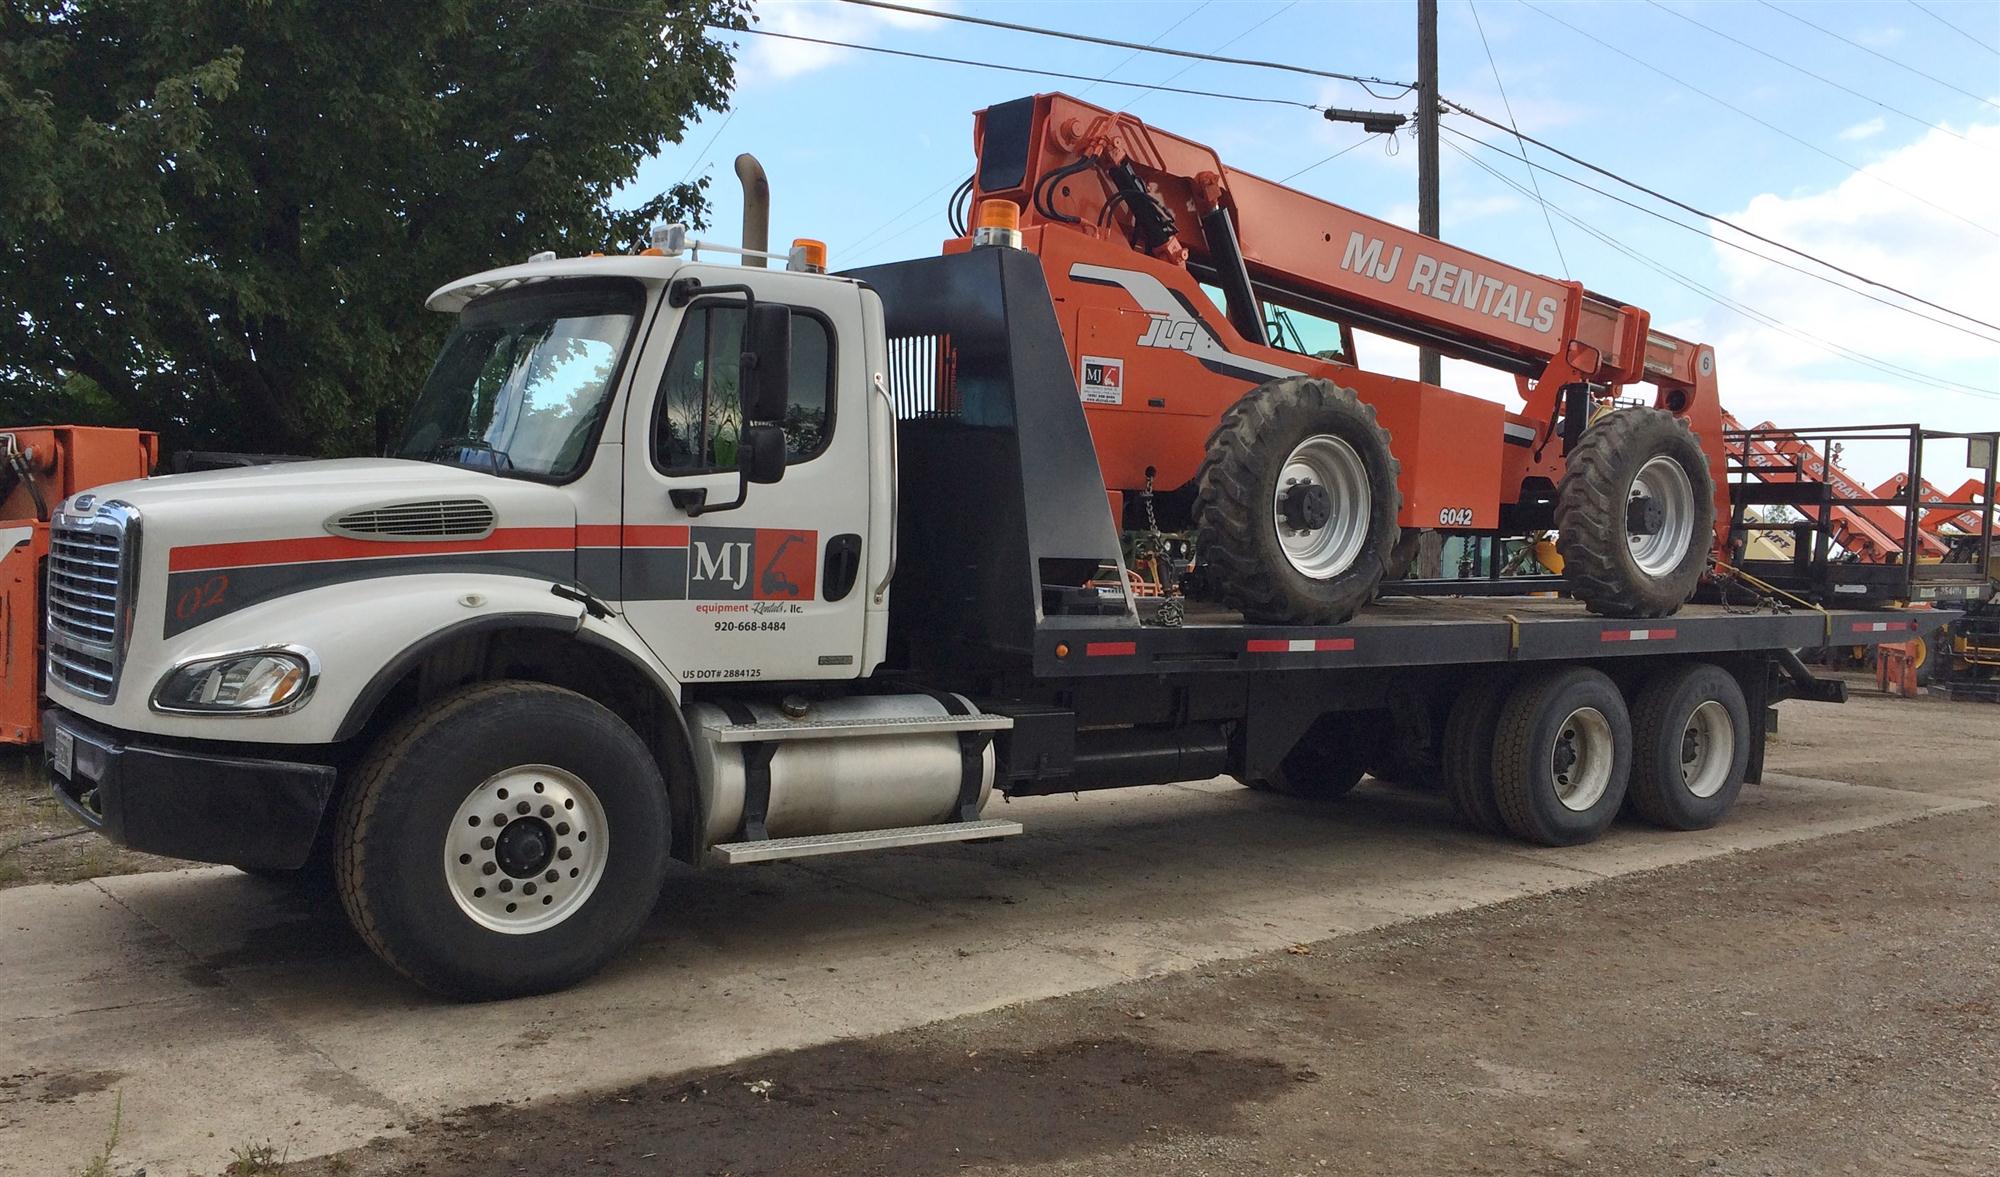 Port Washington new used construction equipment dealer: telehandlers, boom lifts, dozers